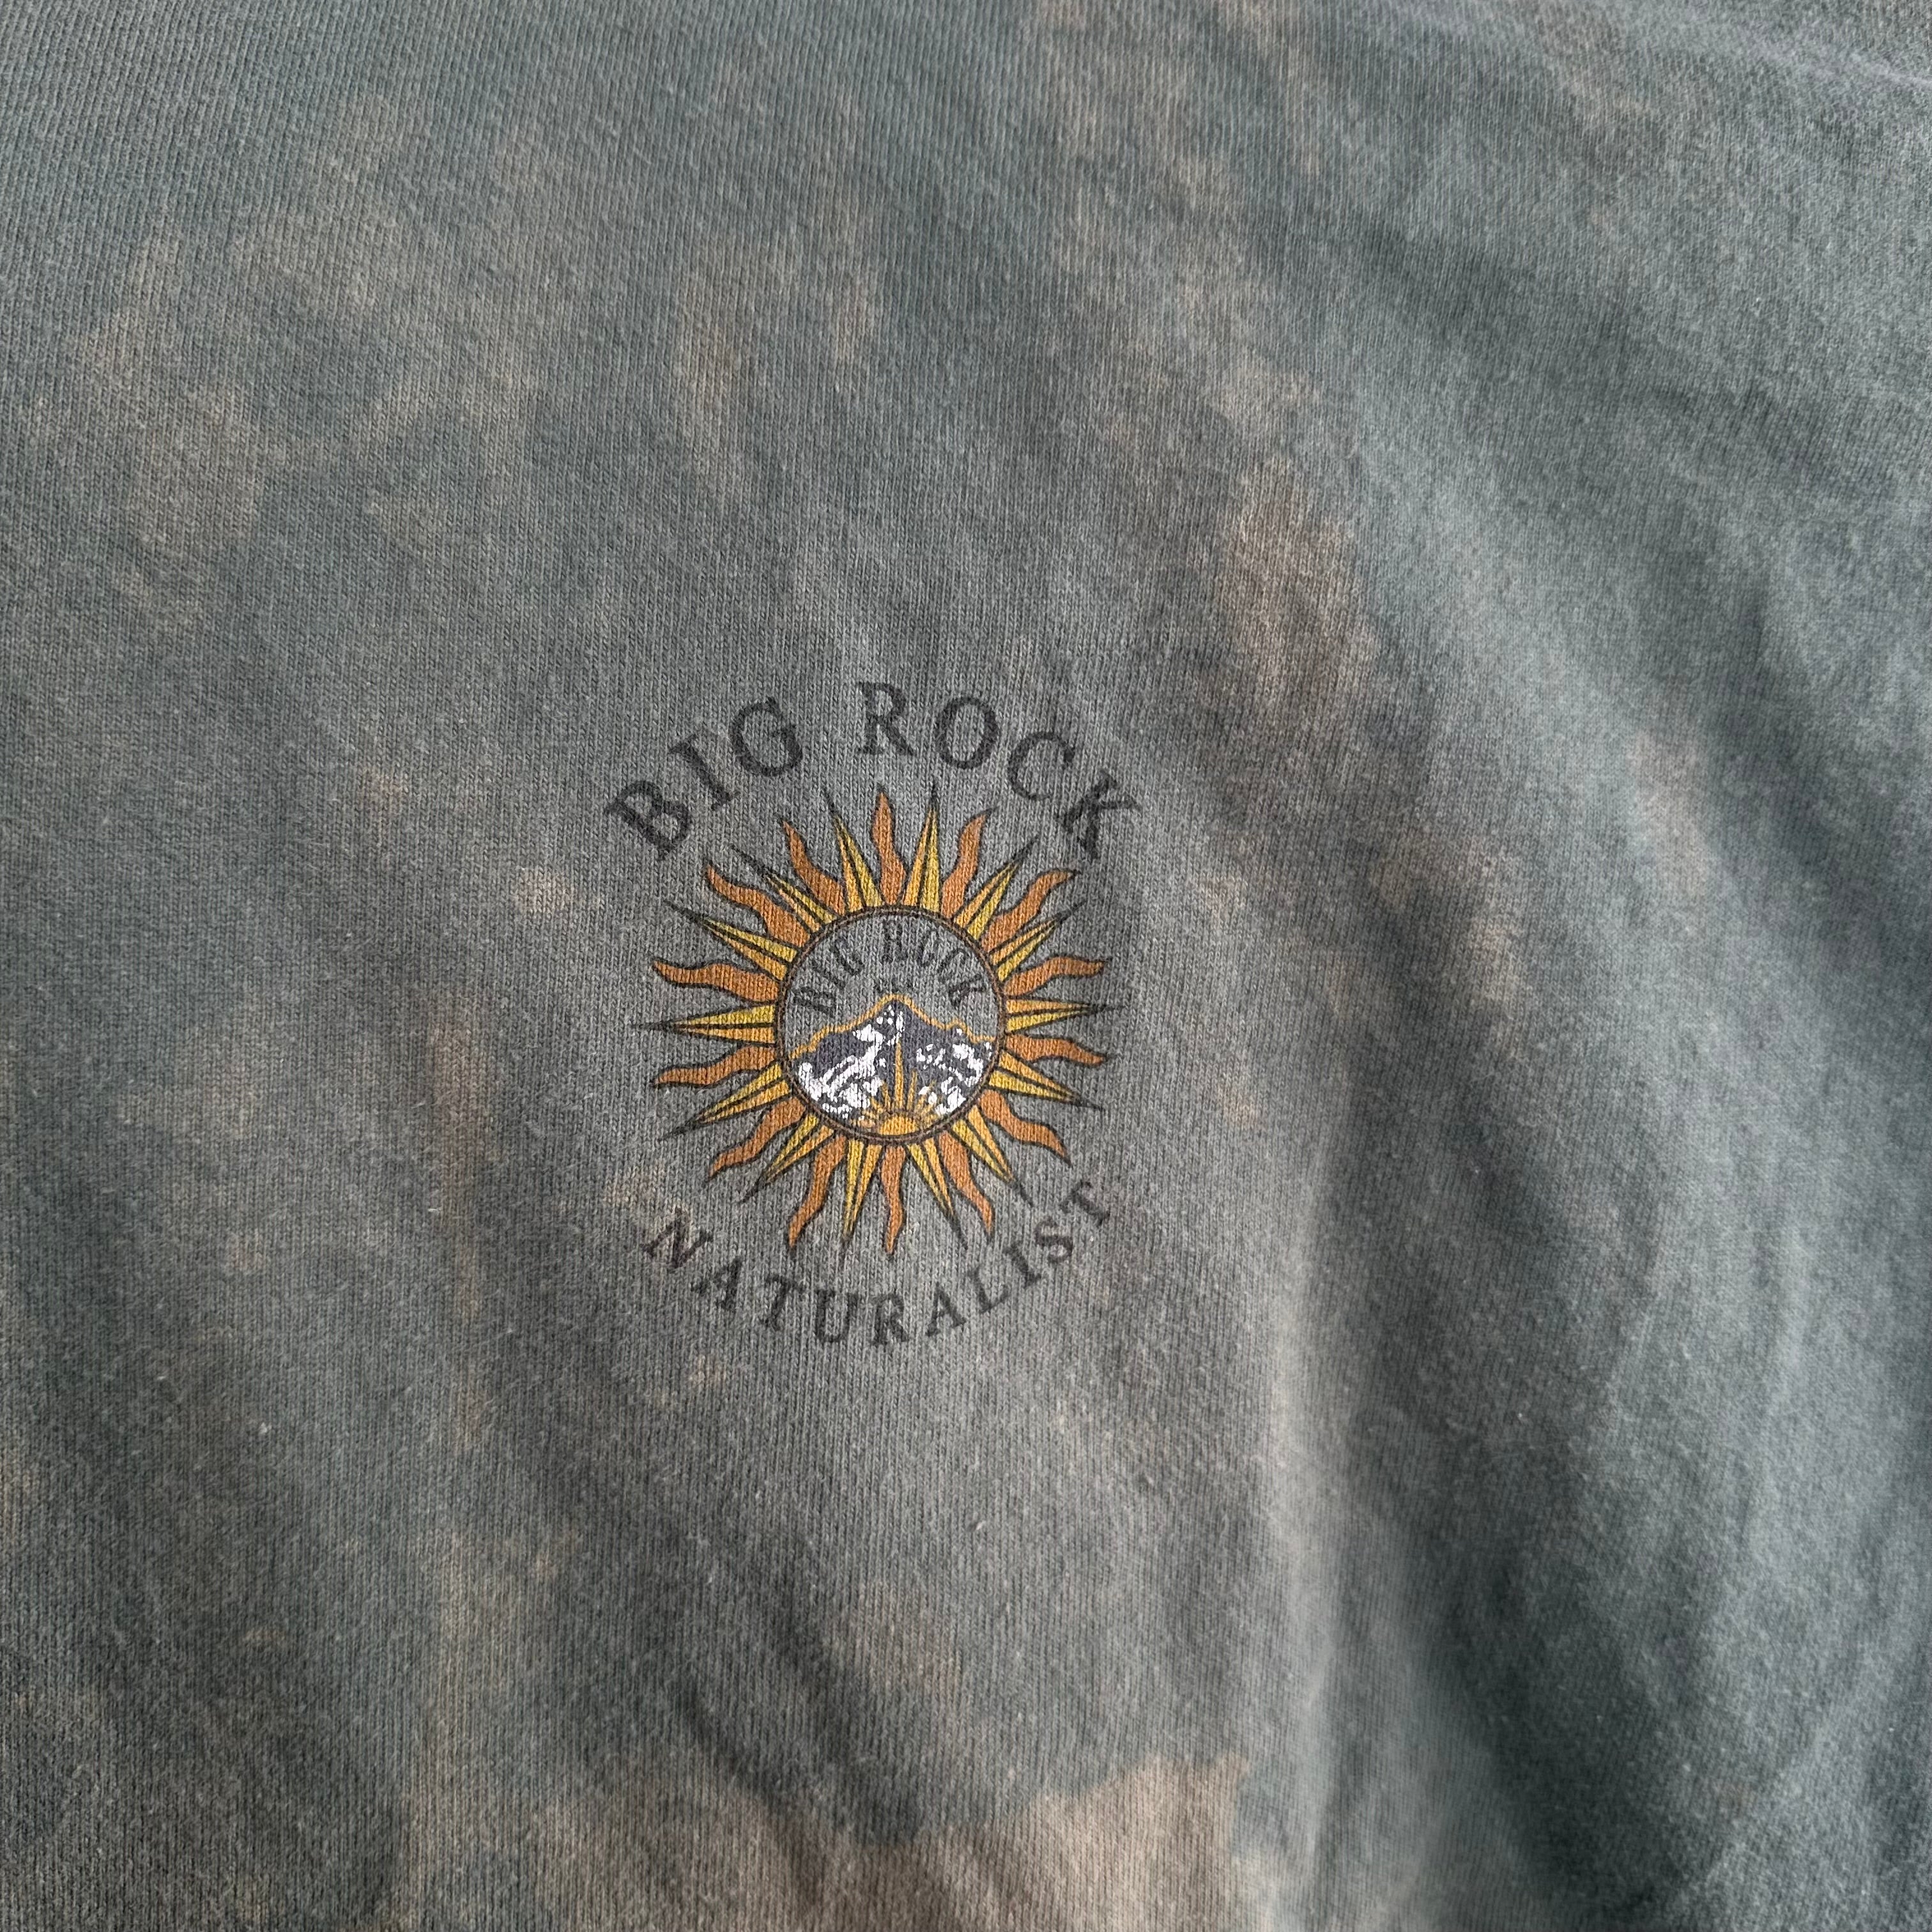 Big Rock Naturalist Mushrooms T-Shirt